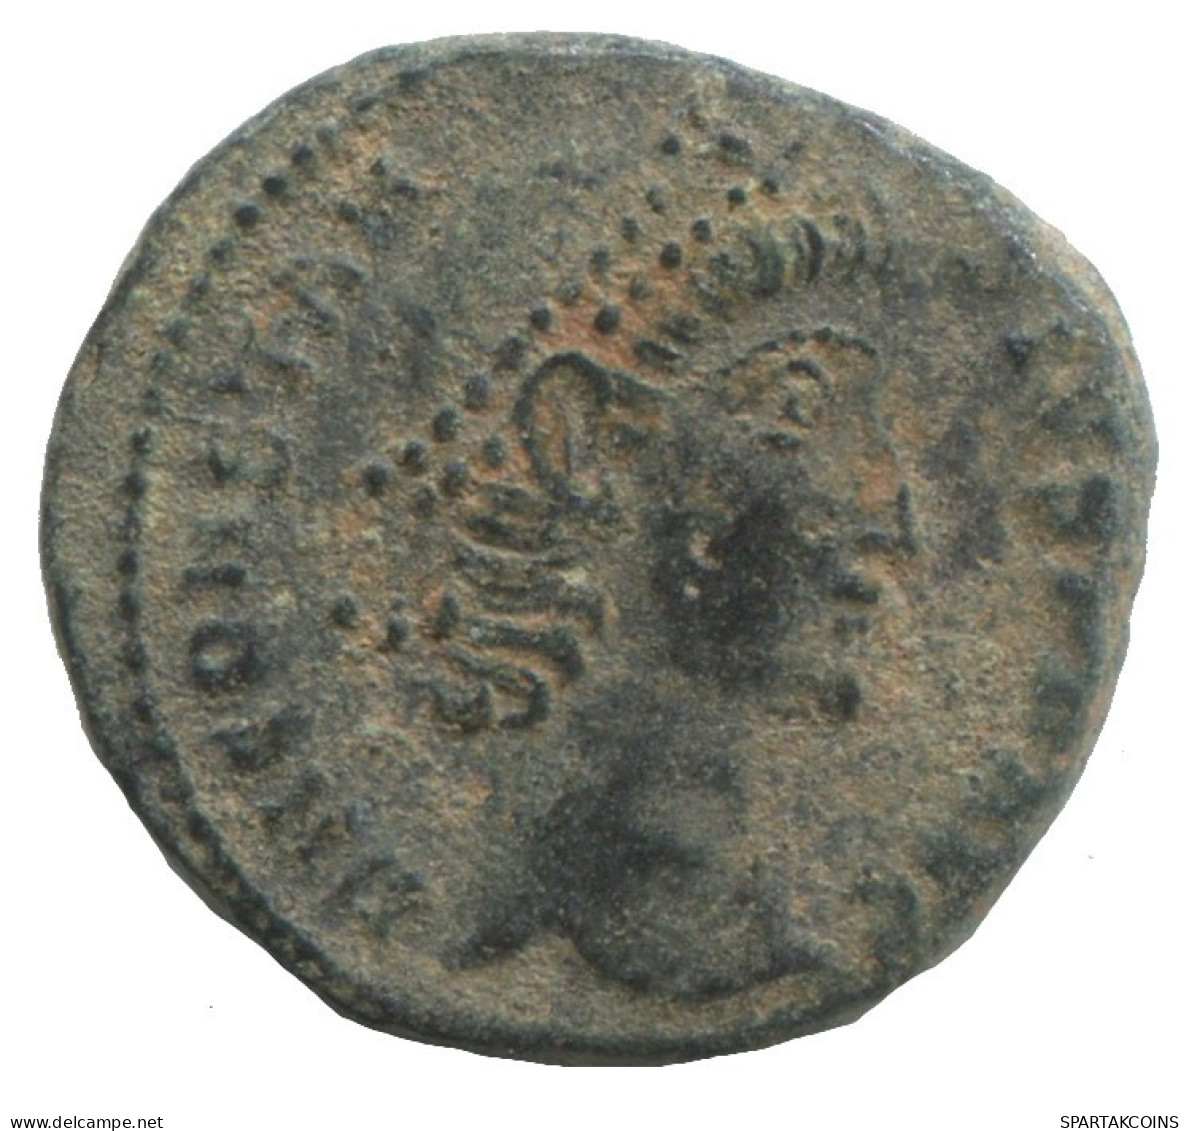 CONSTANTIUS II ANTIOCH SMAN AD347-348 VOT XX MVLT XXX 1.5g/16mm #ANN1509.10.D.A - The Christian Empire (307 AD To 363 AD)